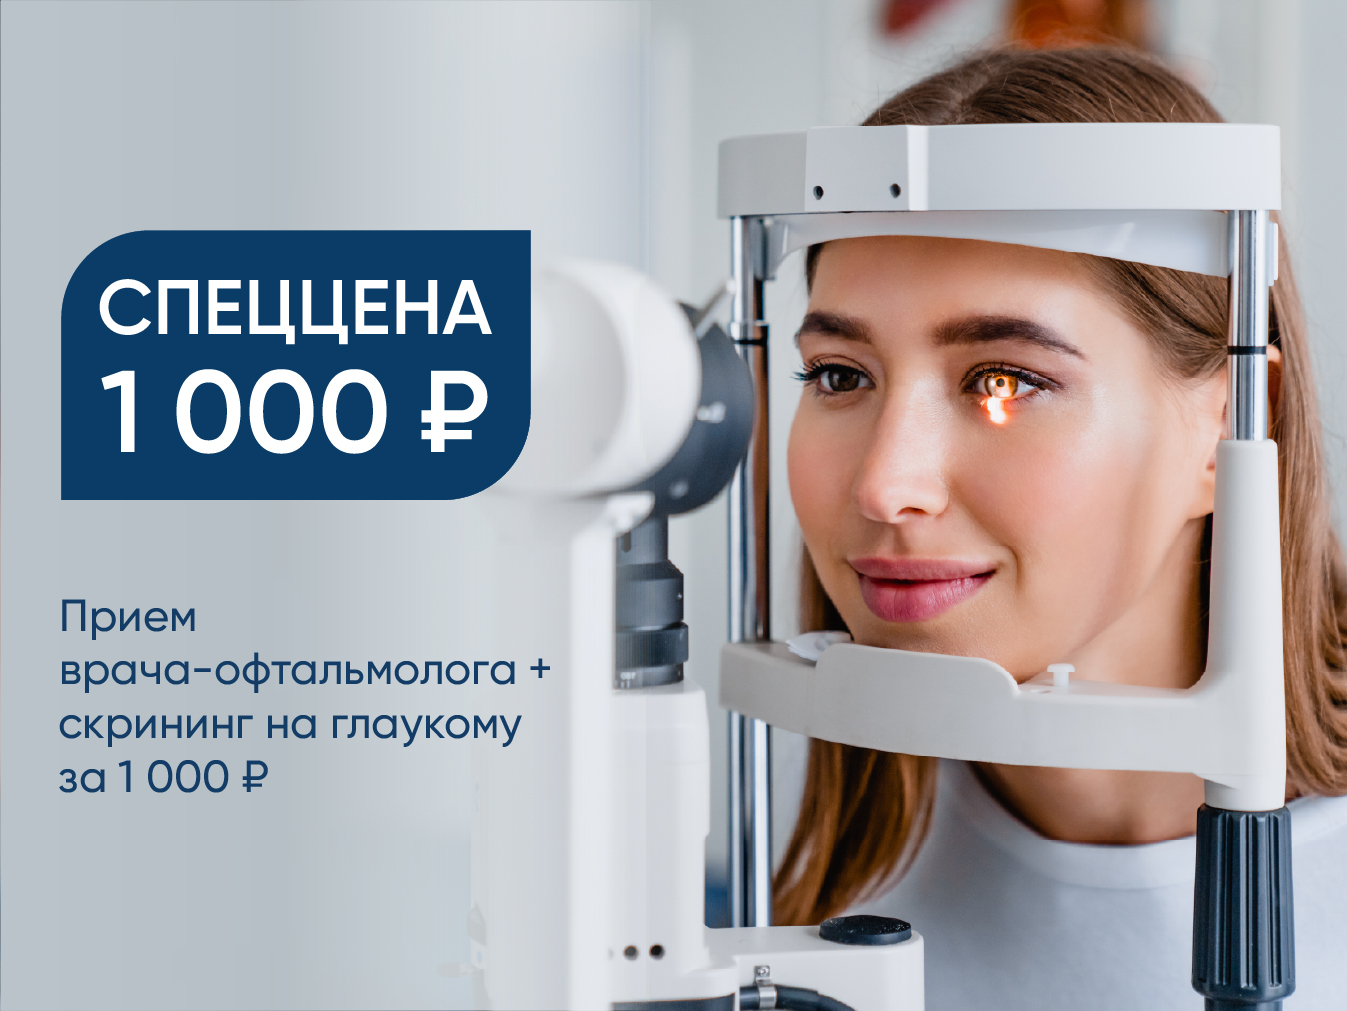 Прием врача-офтальмолога + скрининг на глаукому за 1000 руб. (Акция завершена)